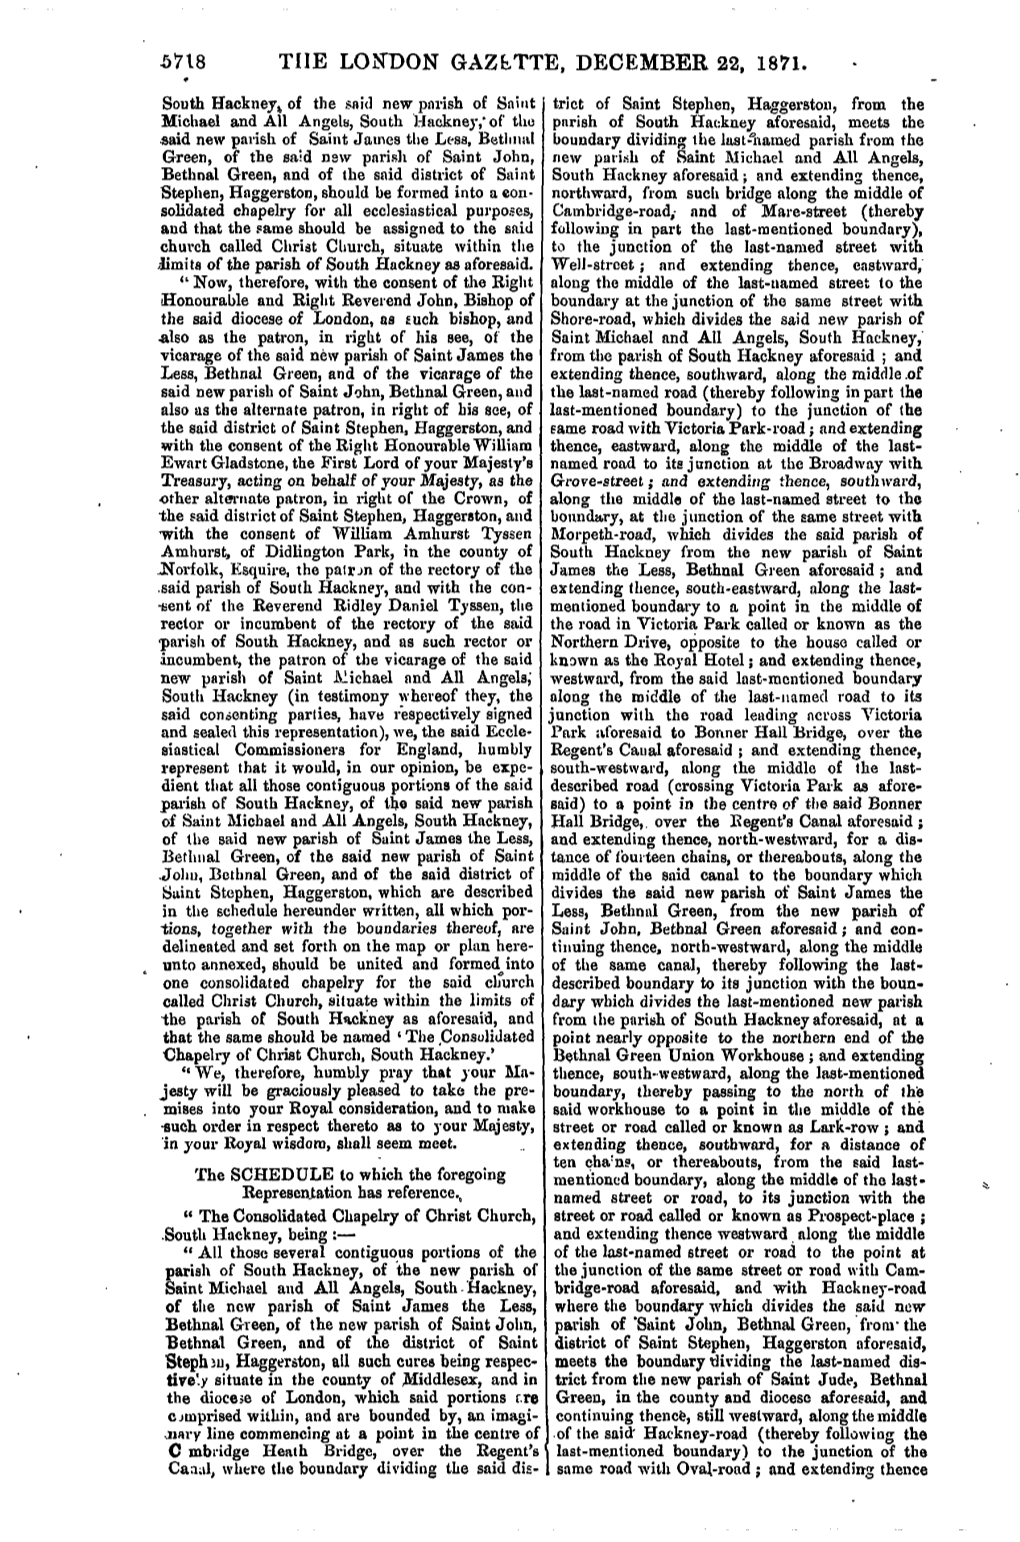 5718 the London Gazette, December 22, 1871